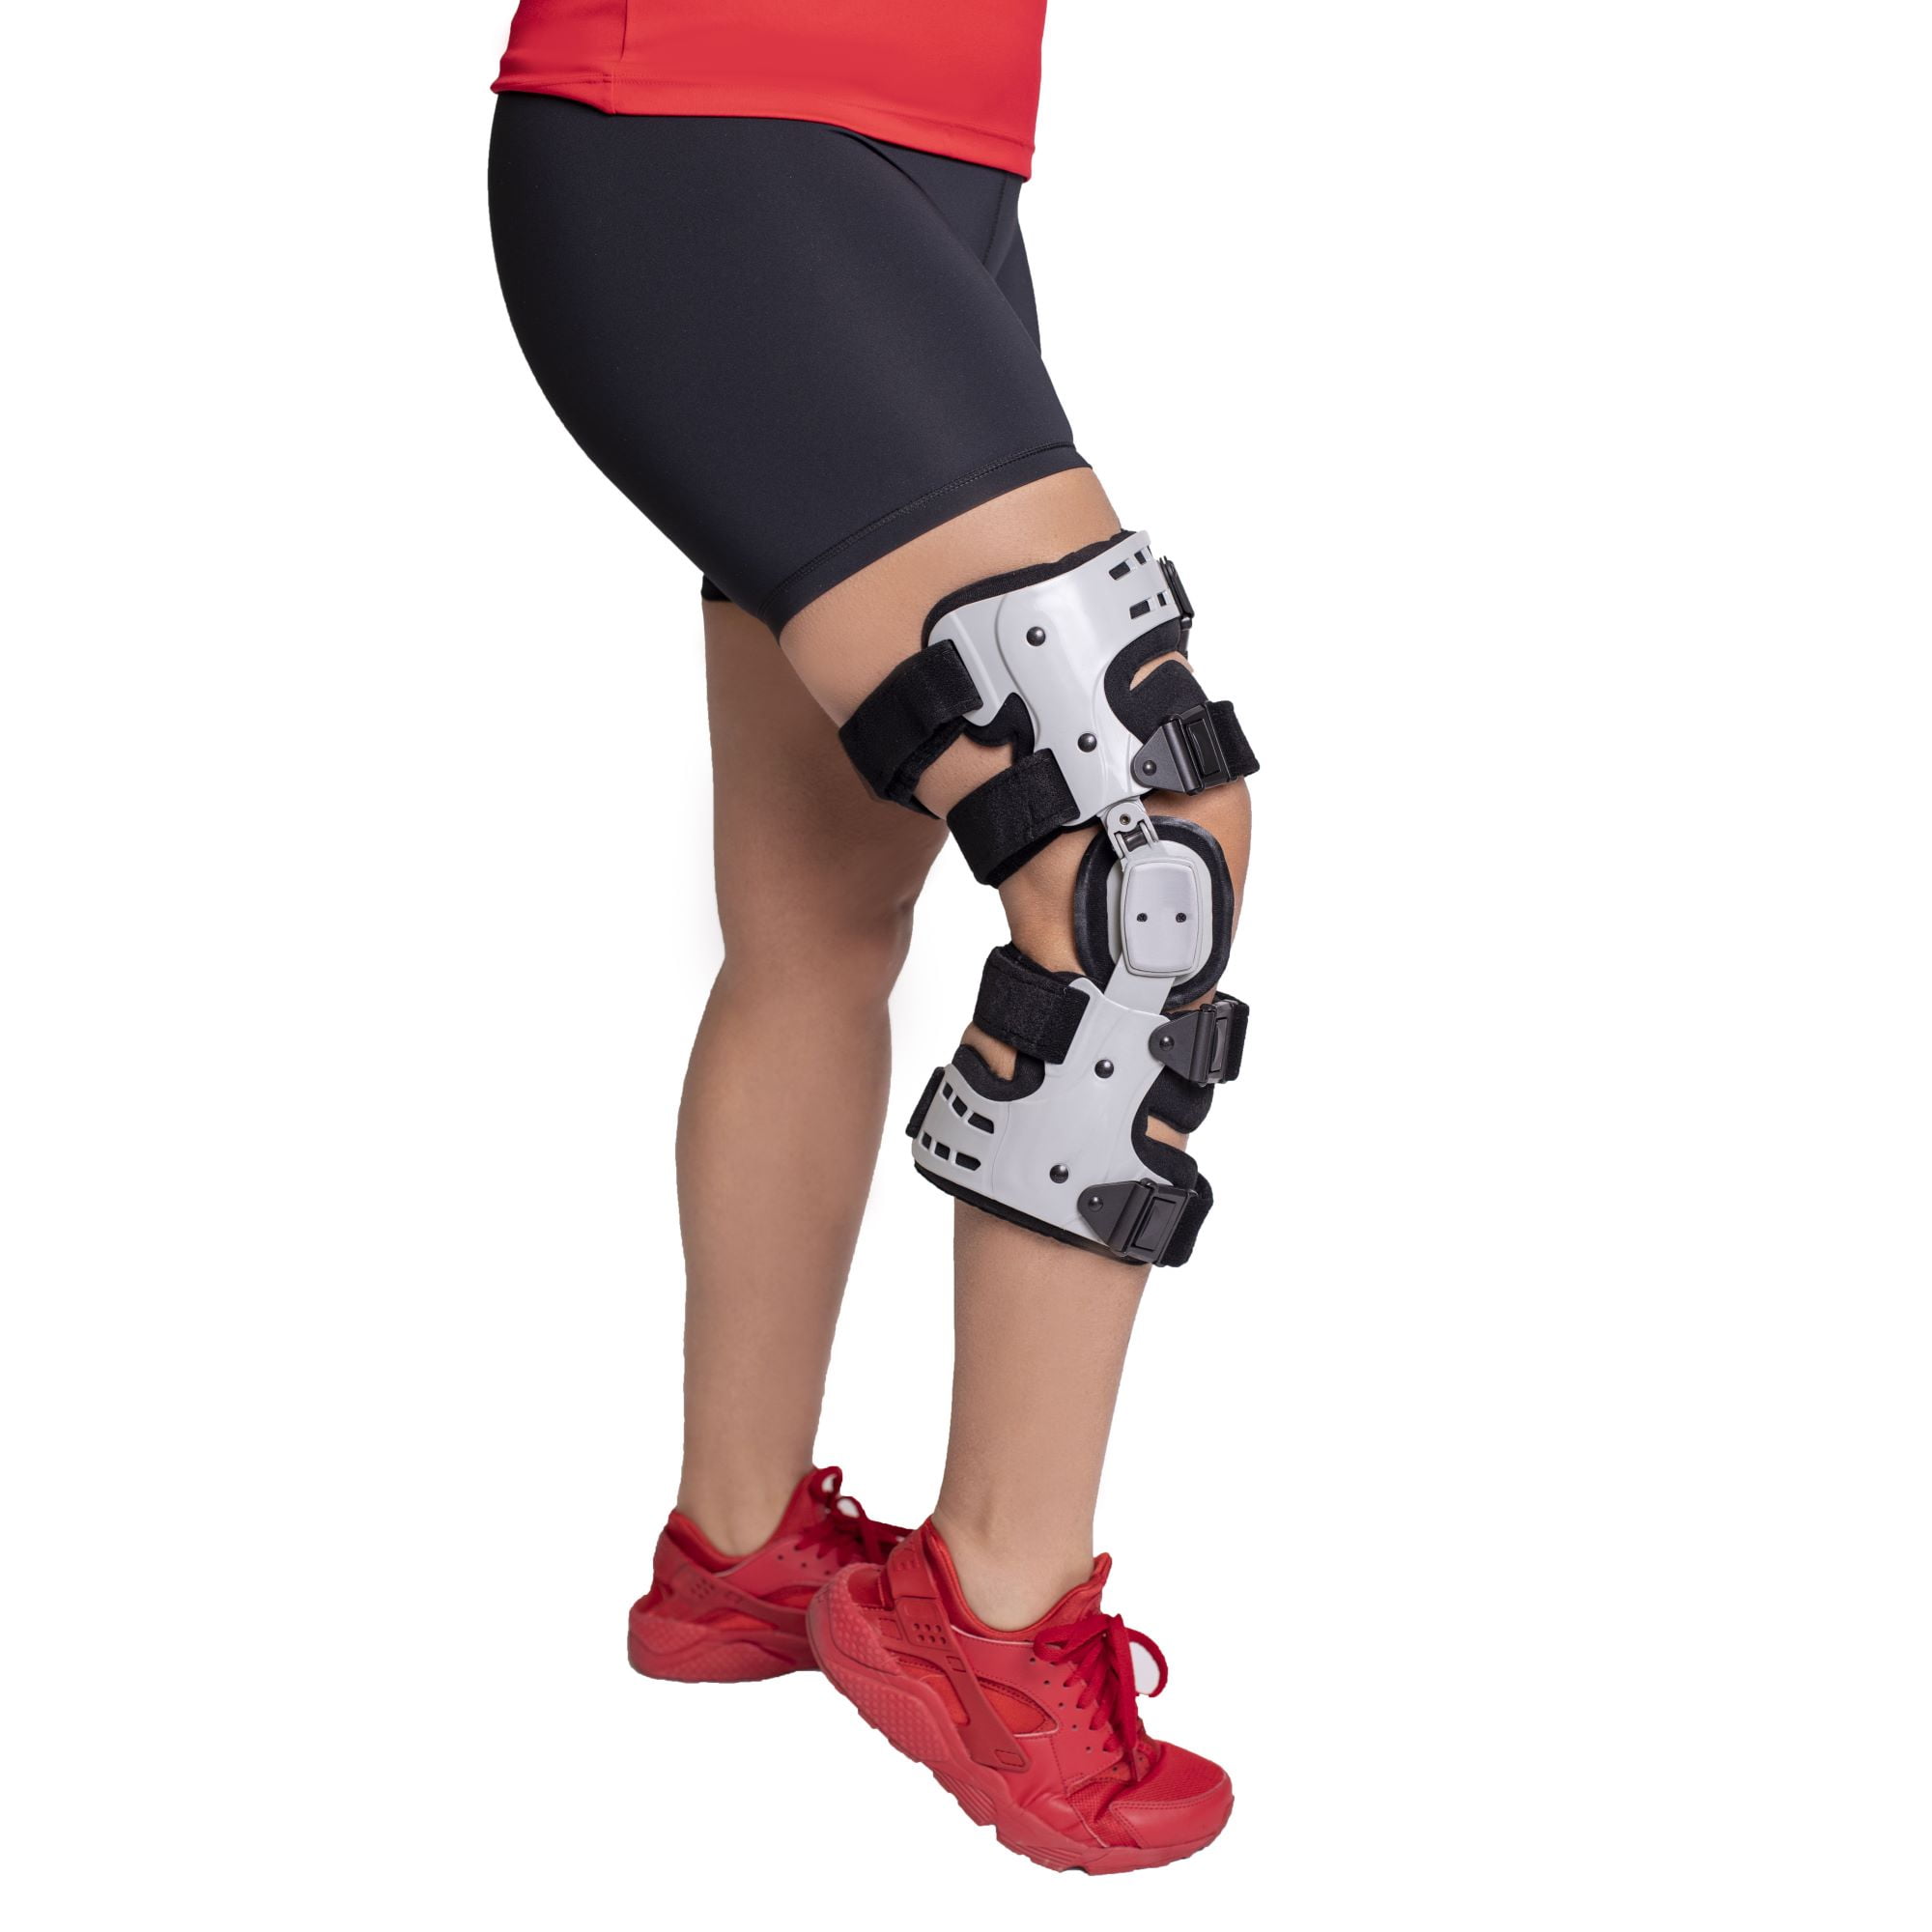 New BREG XL hinged X2K OA XL osteoarthritis Knee Brace For